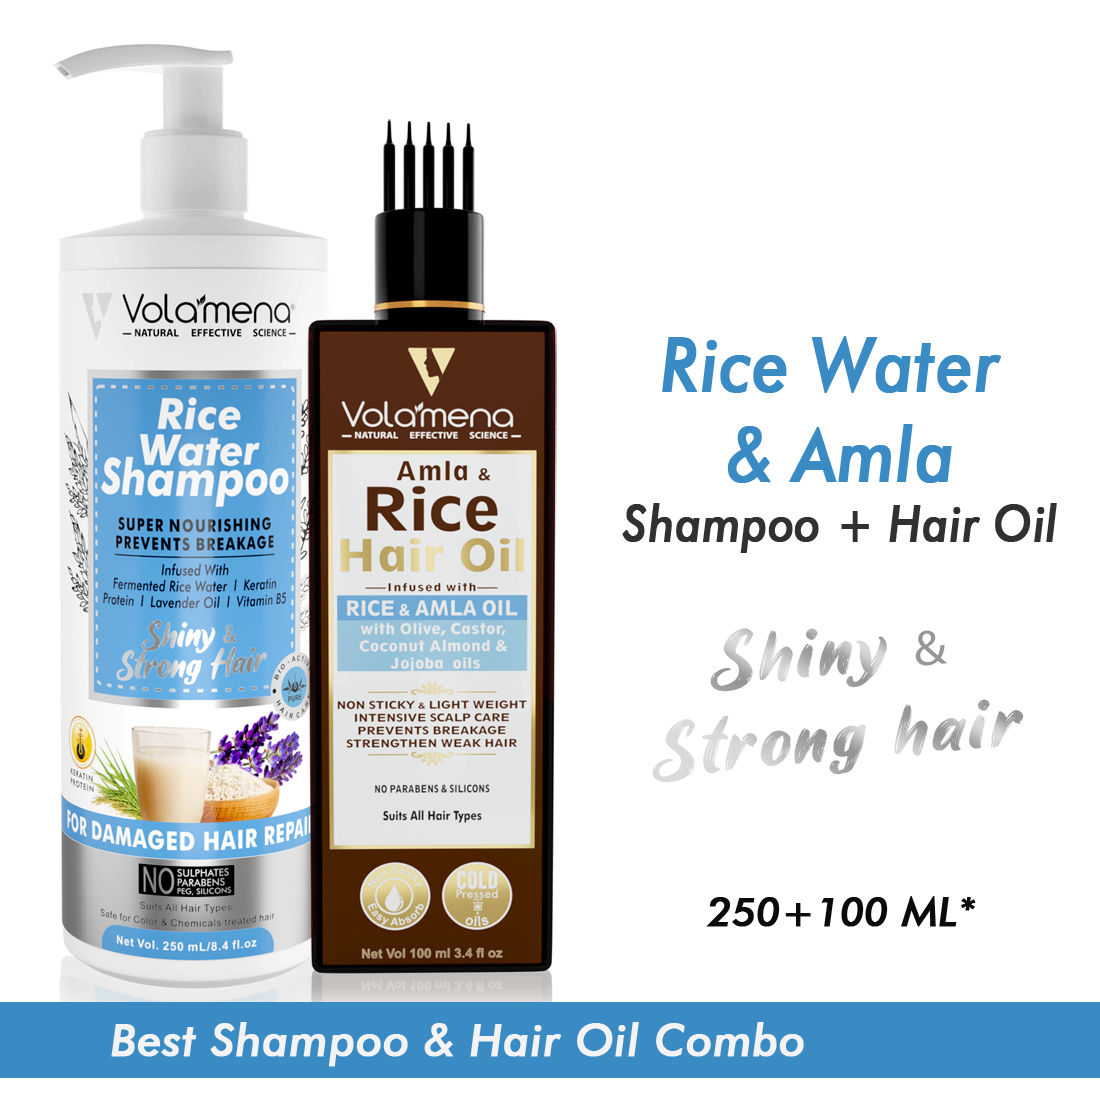 Rice Water Shampoo 250 ml With Amla & Rice Hair Oil 100 ml Combo